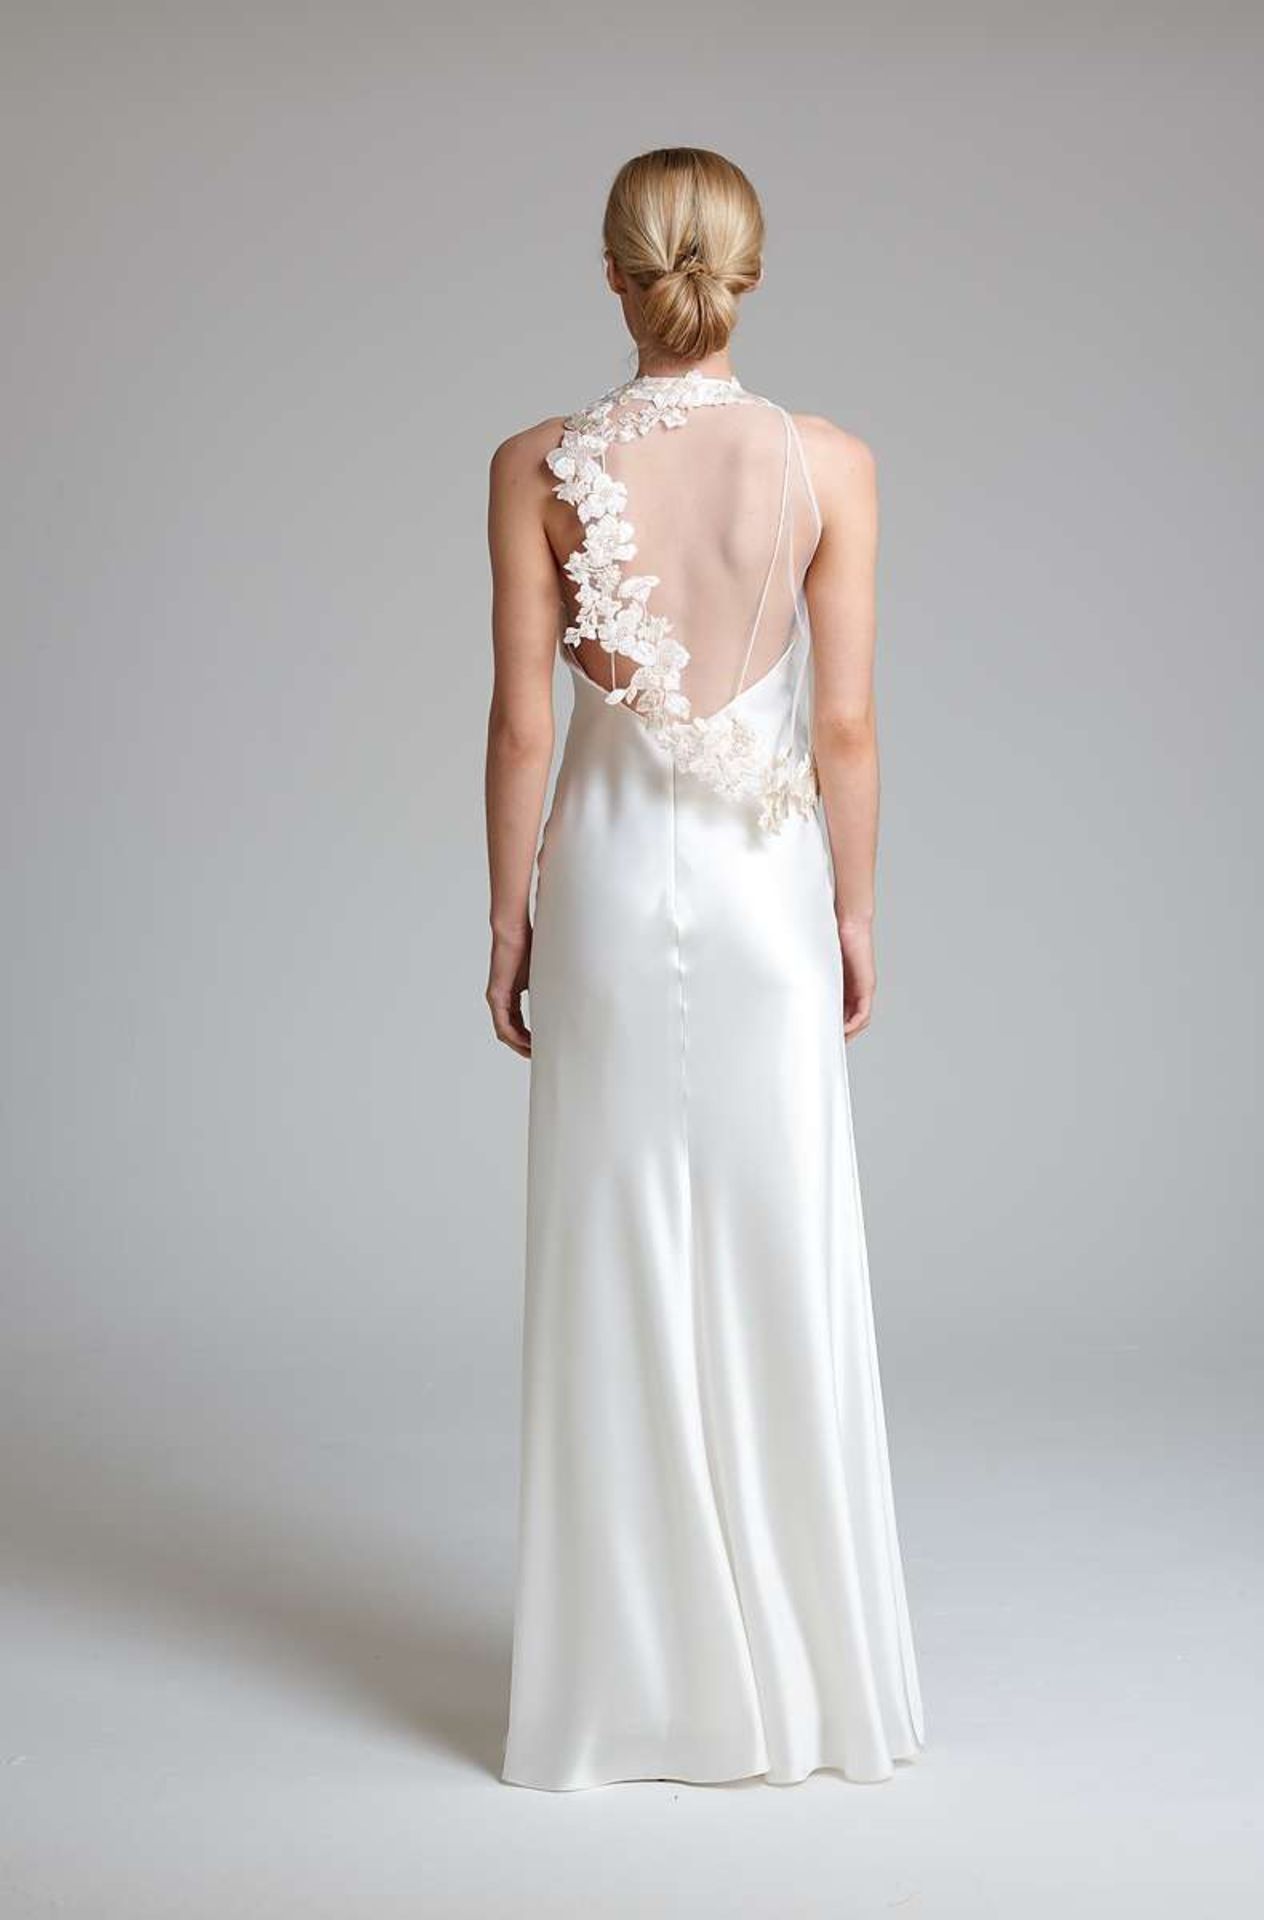 1 x DAVID FIELDEN '8813' Elegant High Neck Biased Cut Designer Wedding Dress RRP £2,440 UK14 - Image 3 of 11